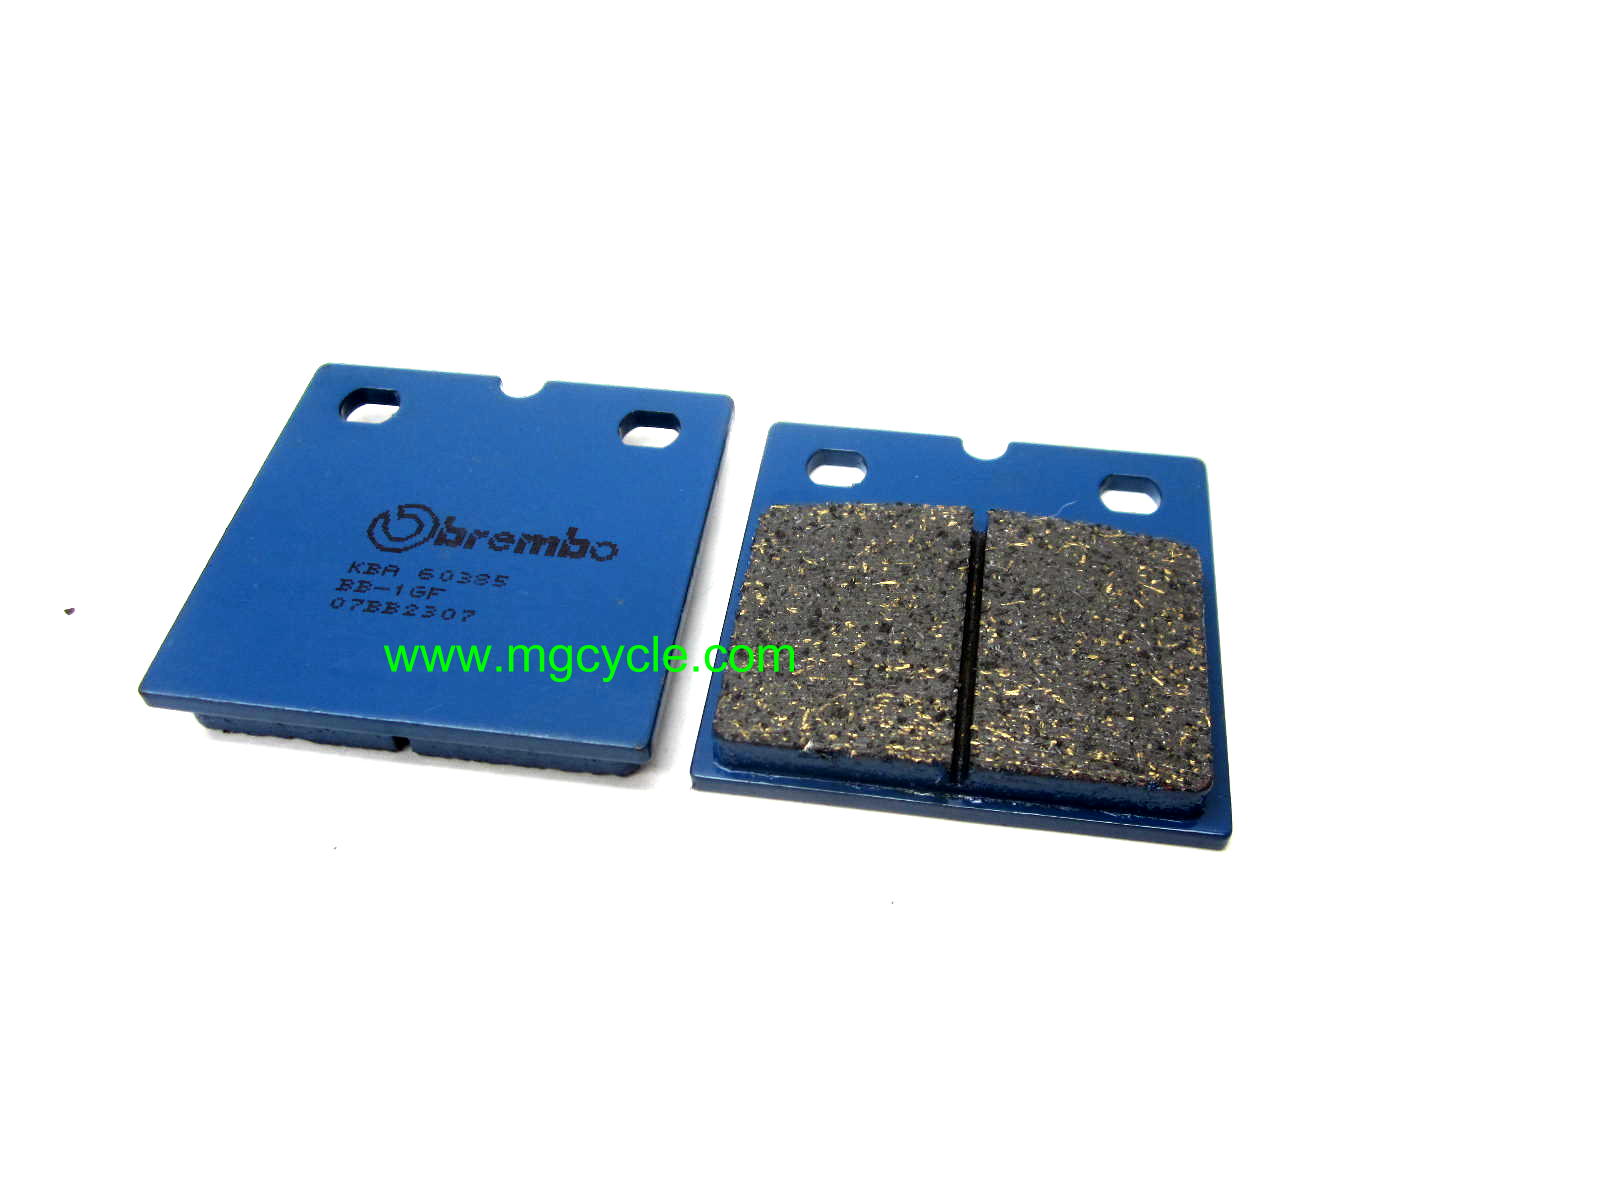 Brembo carbon ceramic pads for F09 caliper